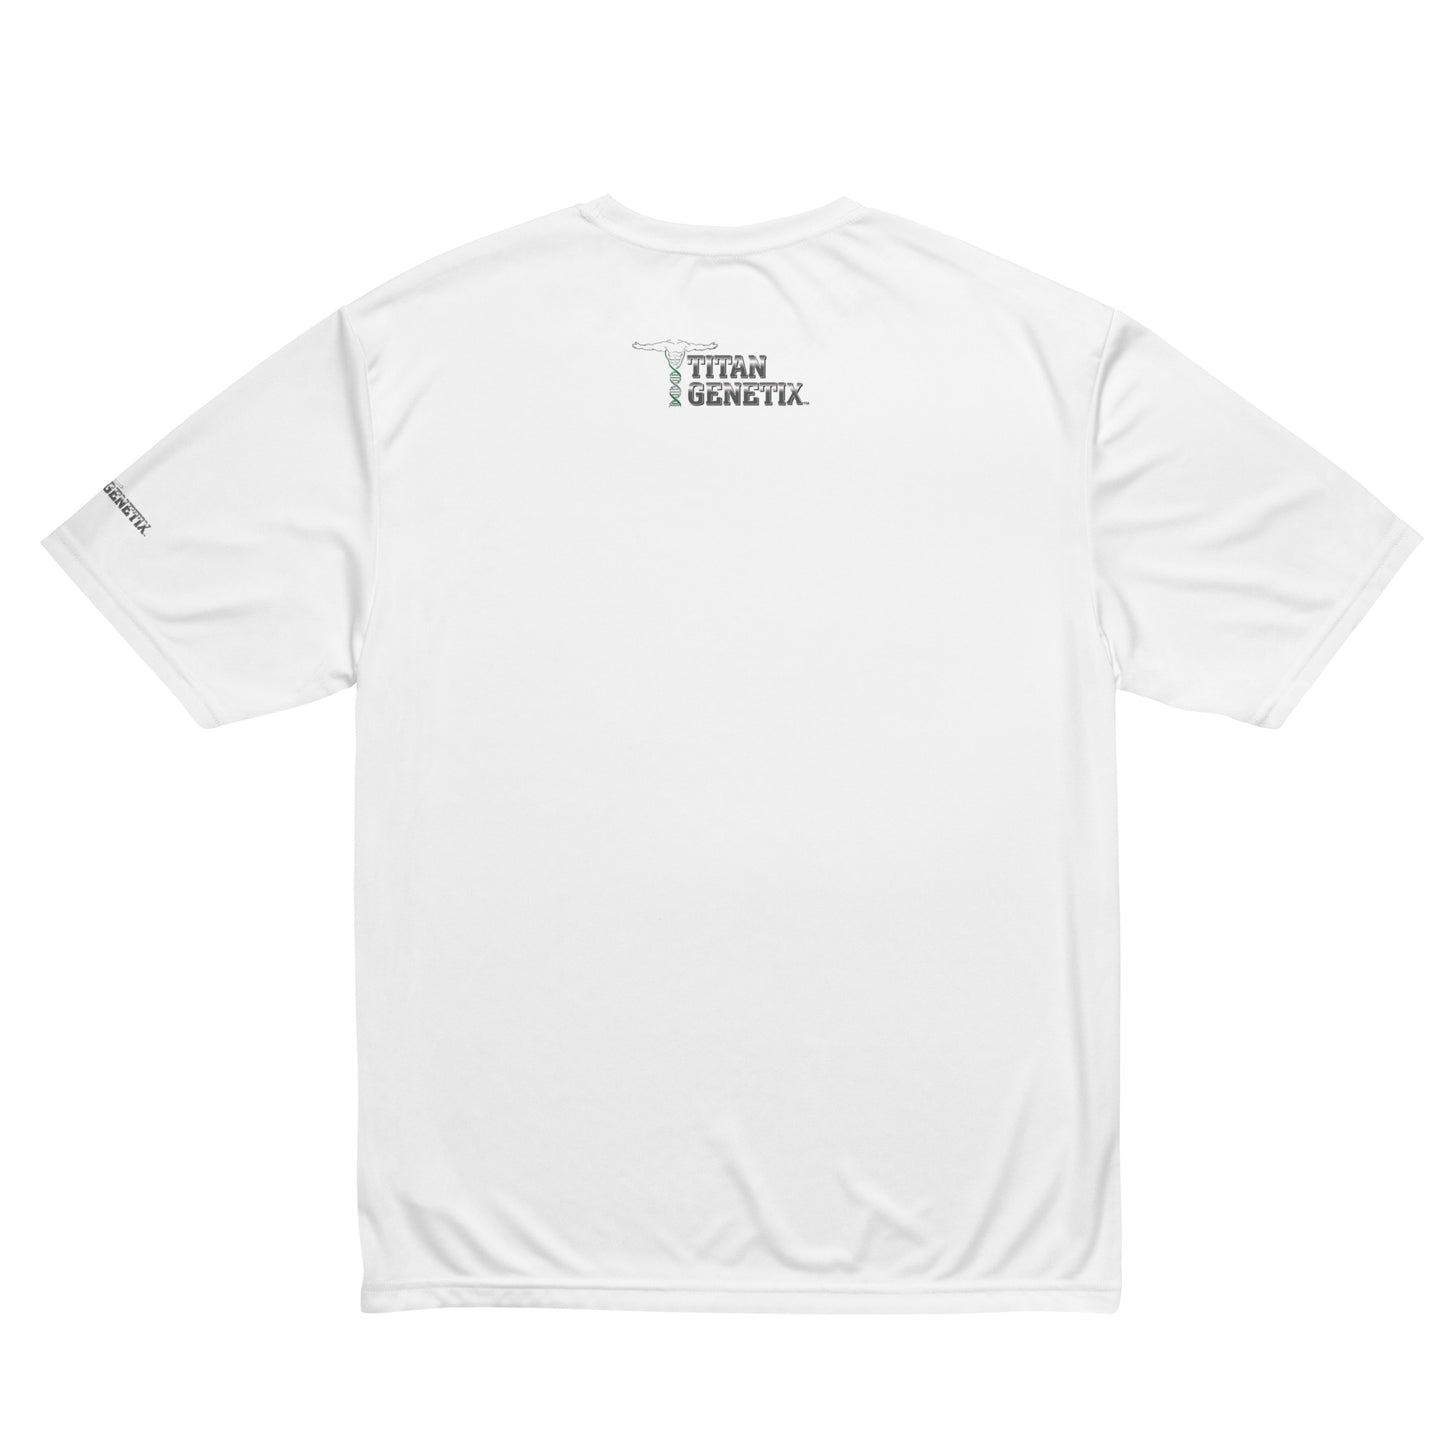 Titan Genetix - Unisex Performance Jersey T-Shirt